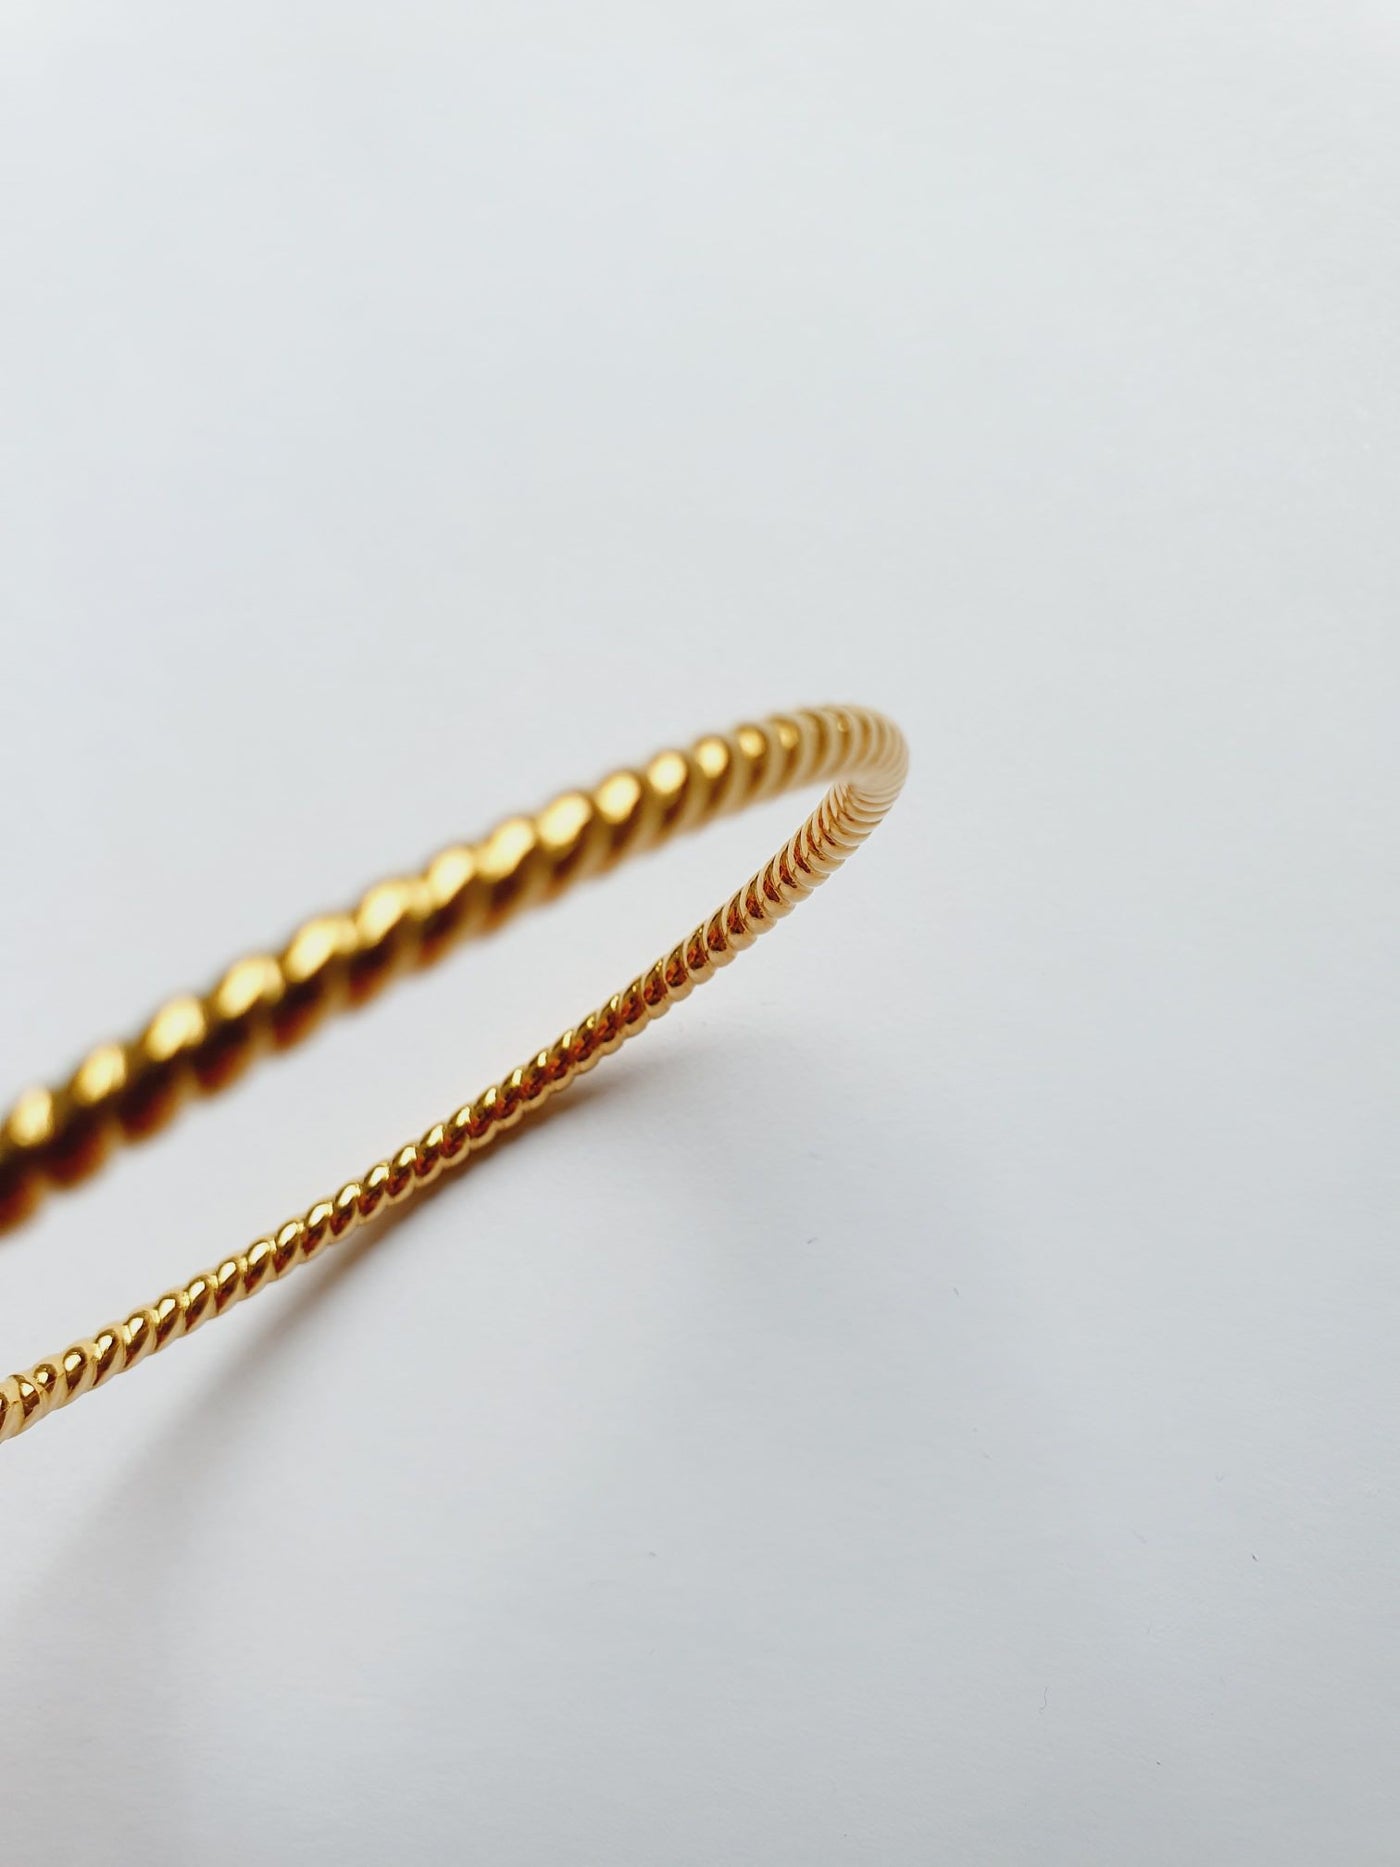 Vintage Gold Plated Round Twist Bangle Bracelet